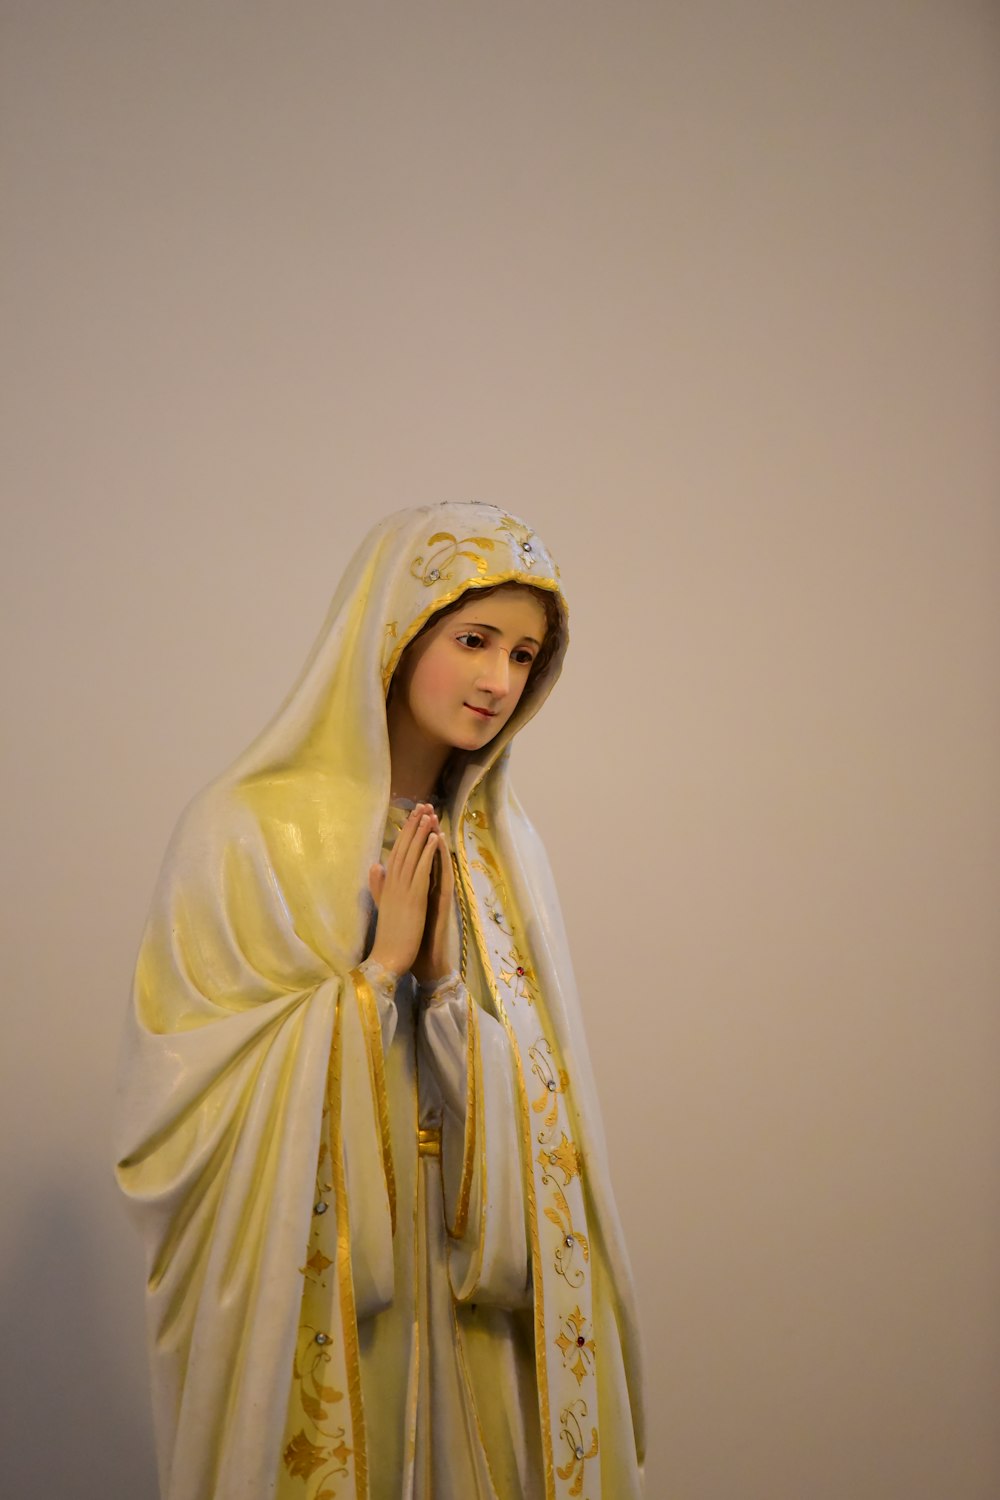 Virgin Mary statue